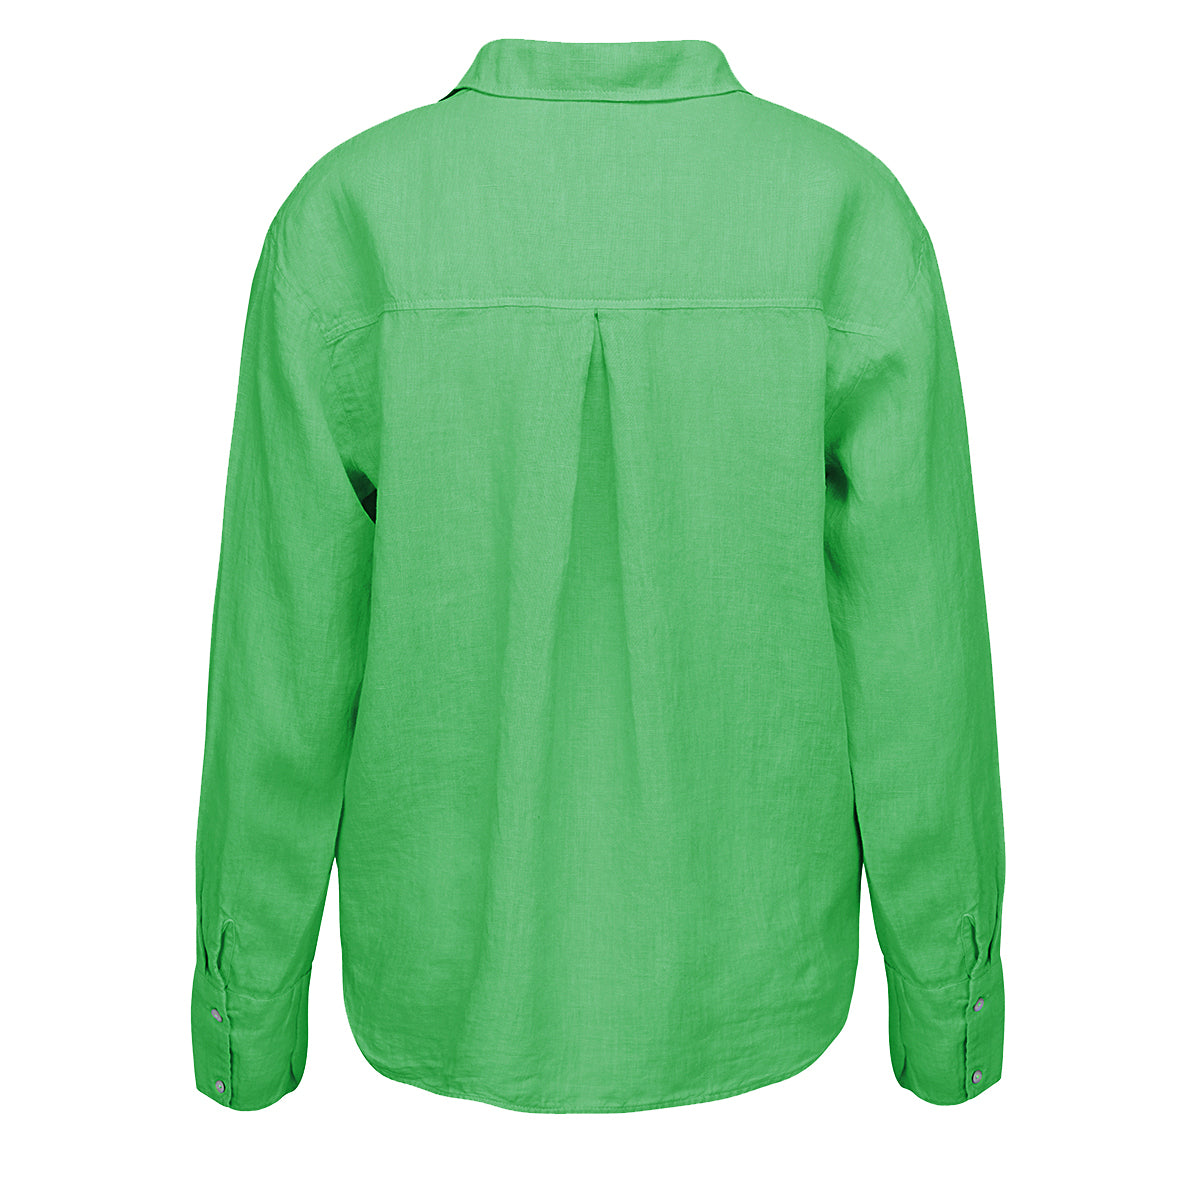 LUXZUZ // ONE TWO Kitt Shirt Shirt 623 Kelly Green